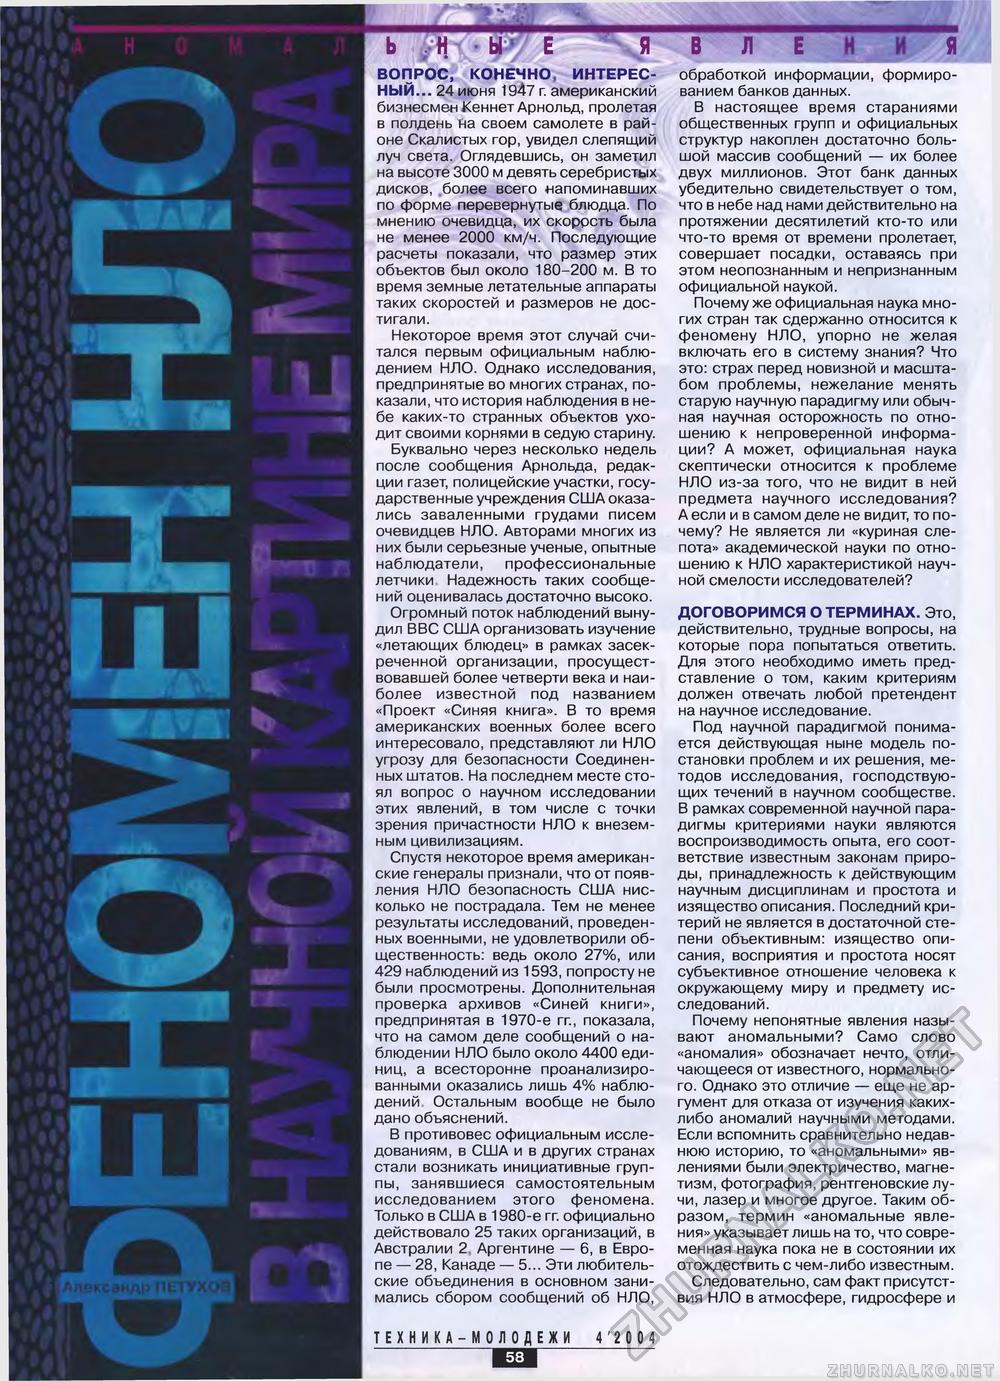 Техника - молодёжи 2004-04, страница 60